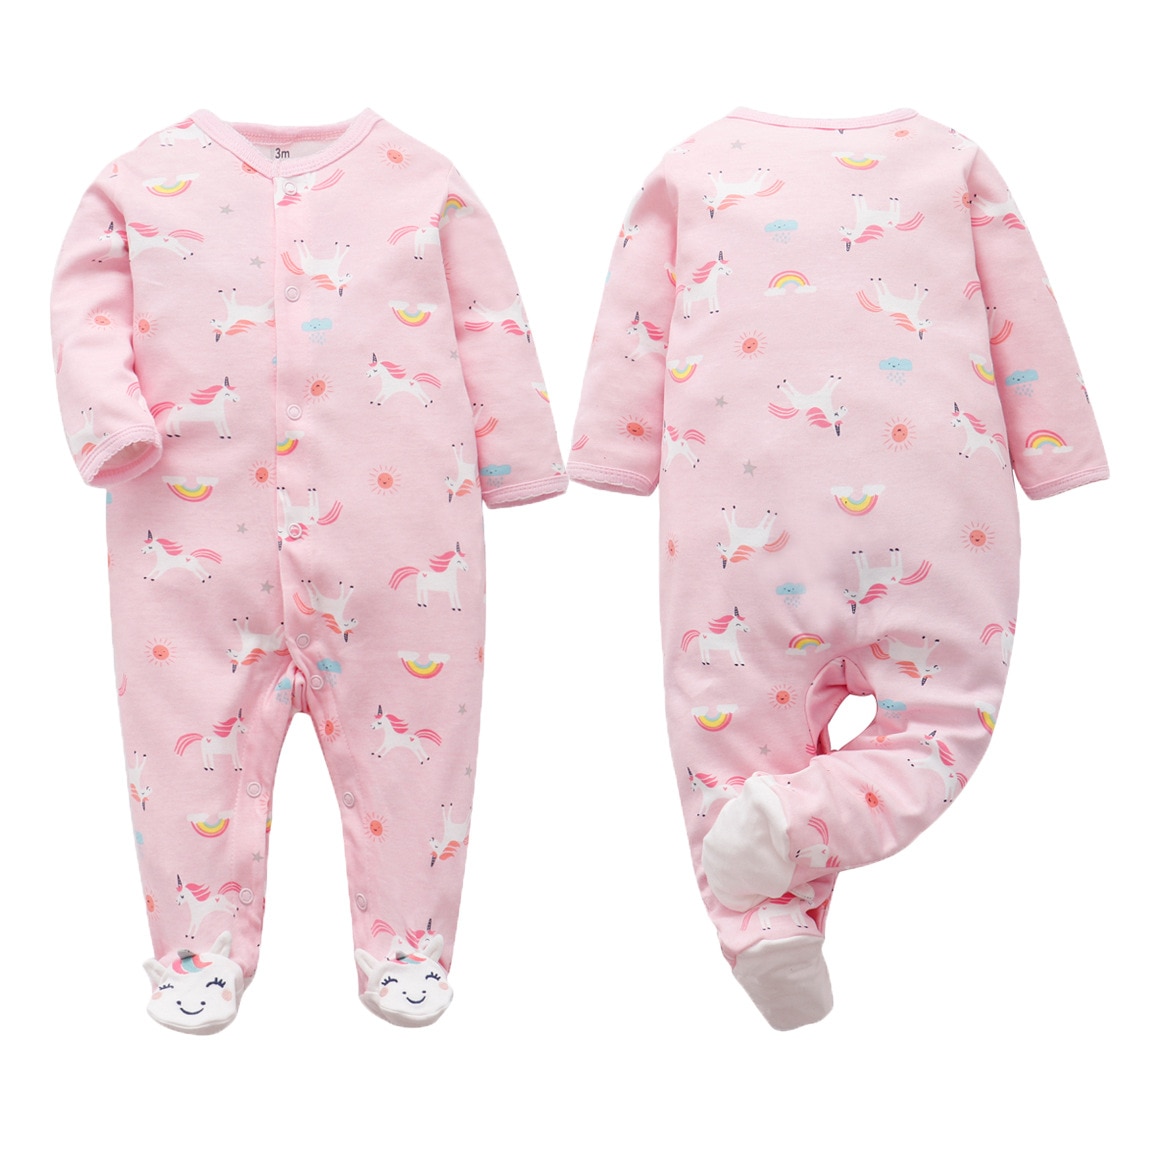 2020 Baby Girl sleepsuits Infant Newborn long sleeve..